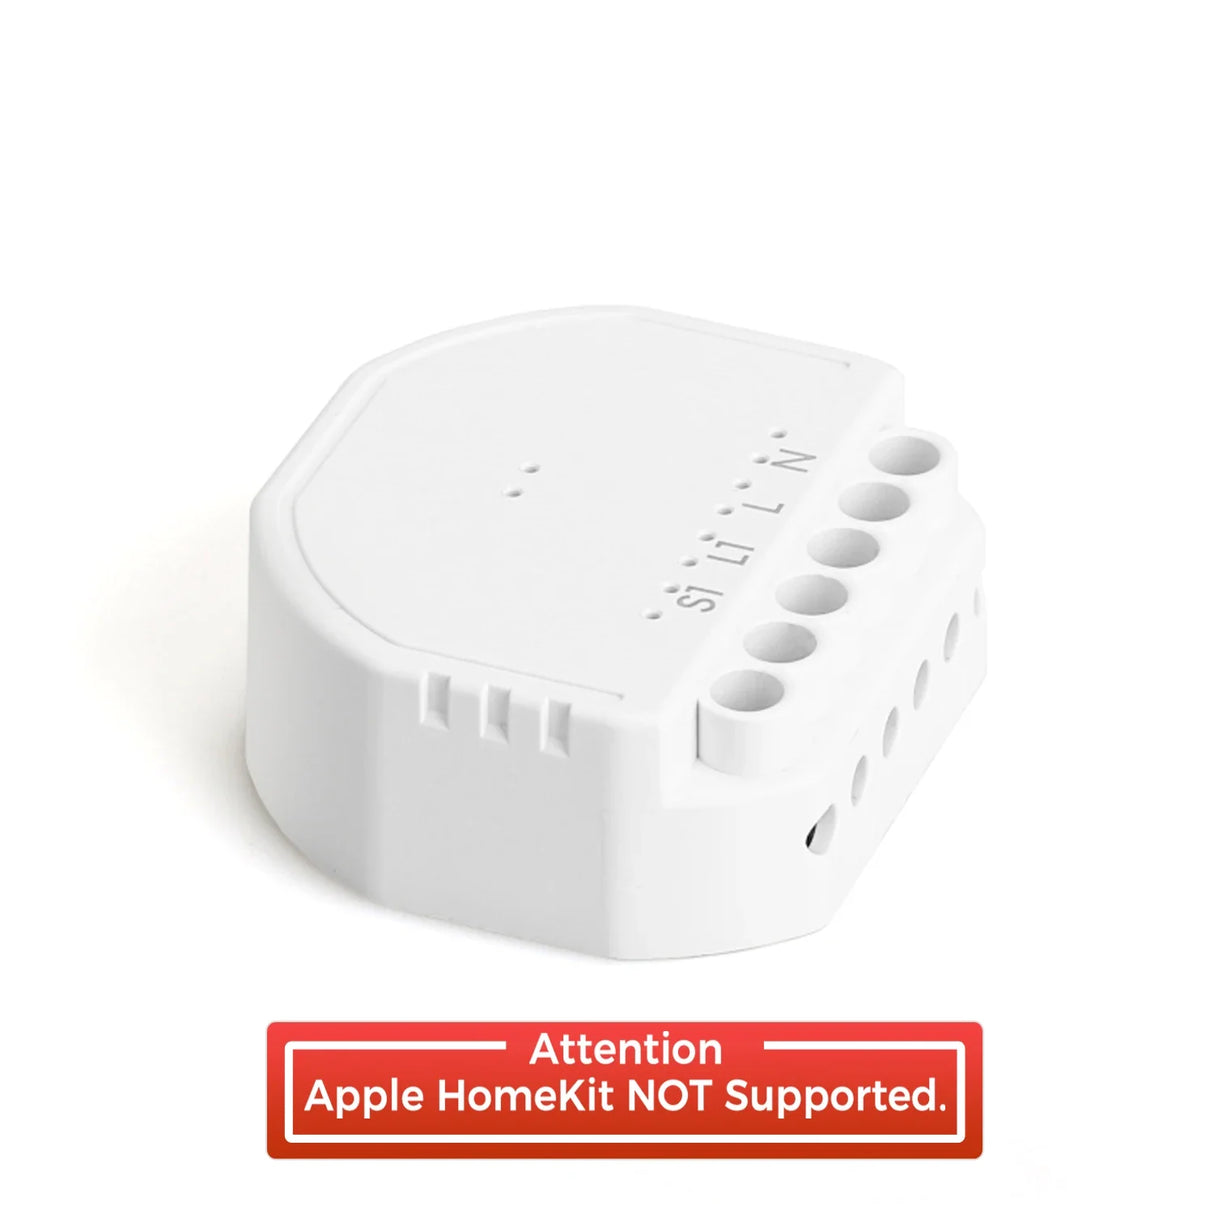 the apple homekitt support device